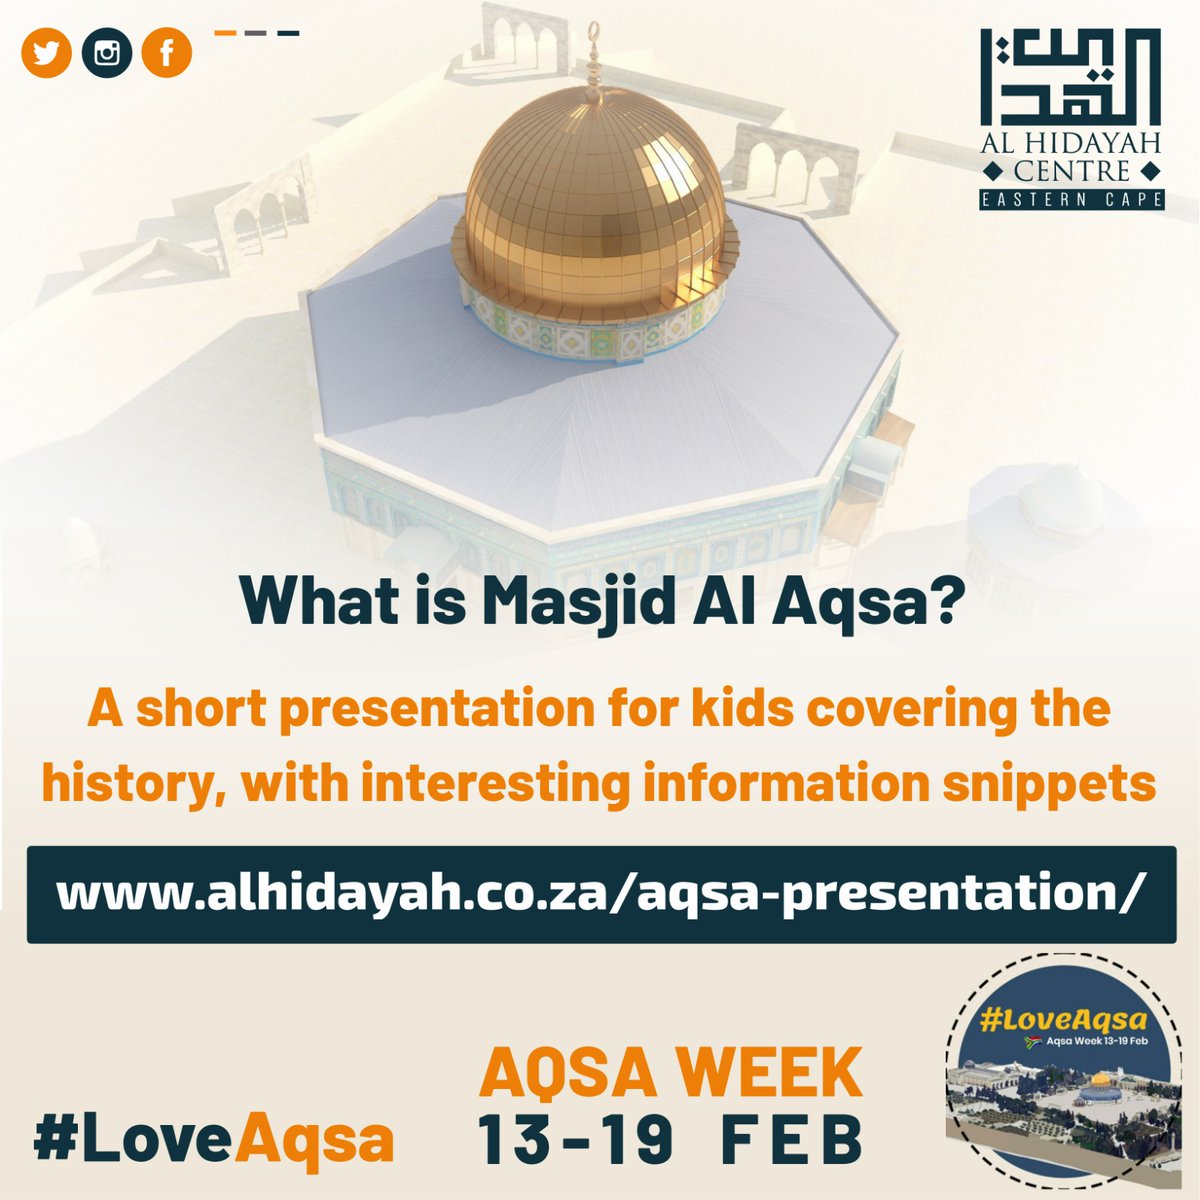 #Aqsa | Presentation for kids
What is Masjid Al Aqsa
Brief overview with interesting snippets to kindle curiosity

⏱️5 minutes

View it here:
alhidayah.co.za/aqsa-presentat…

Aqsa Week 13-19 Feb
#LoveAqsa